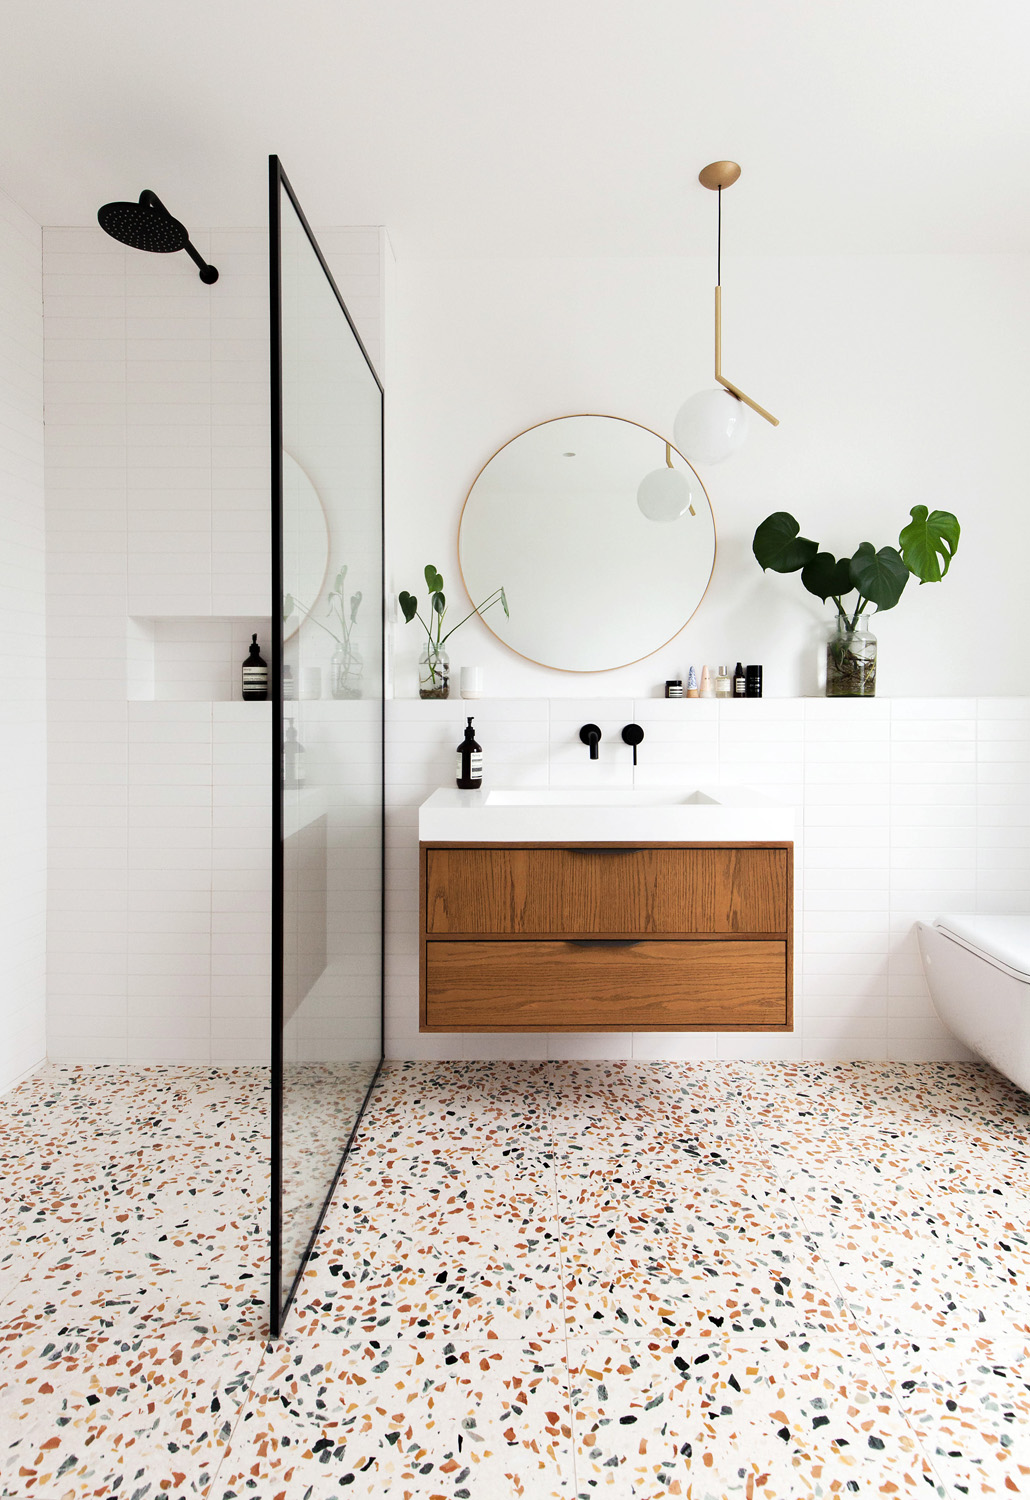 Bathroom by Magri Williams - contemporary architecture and interior design studio in London